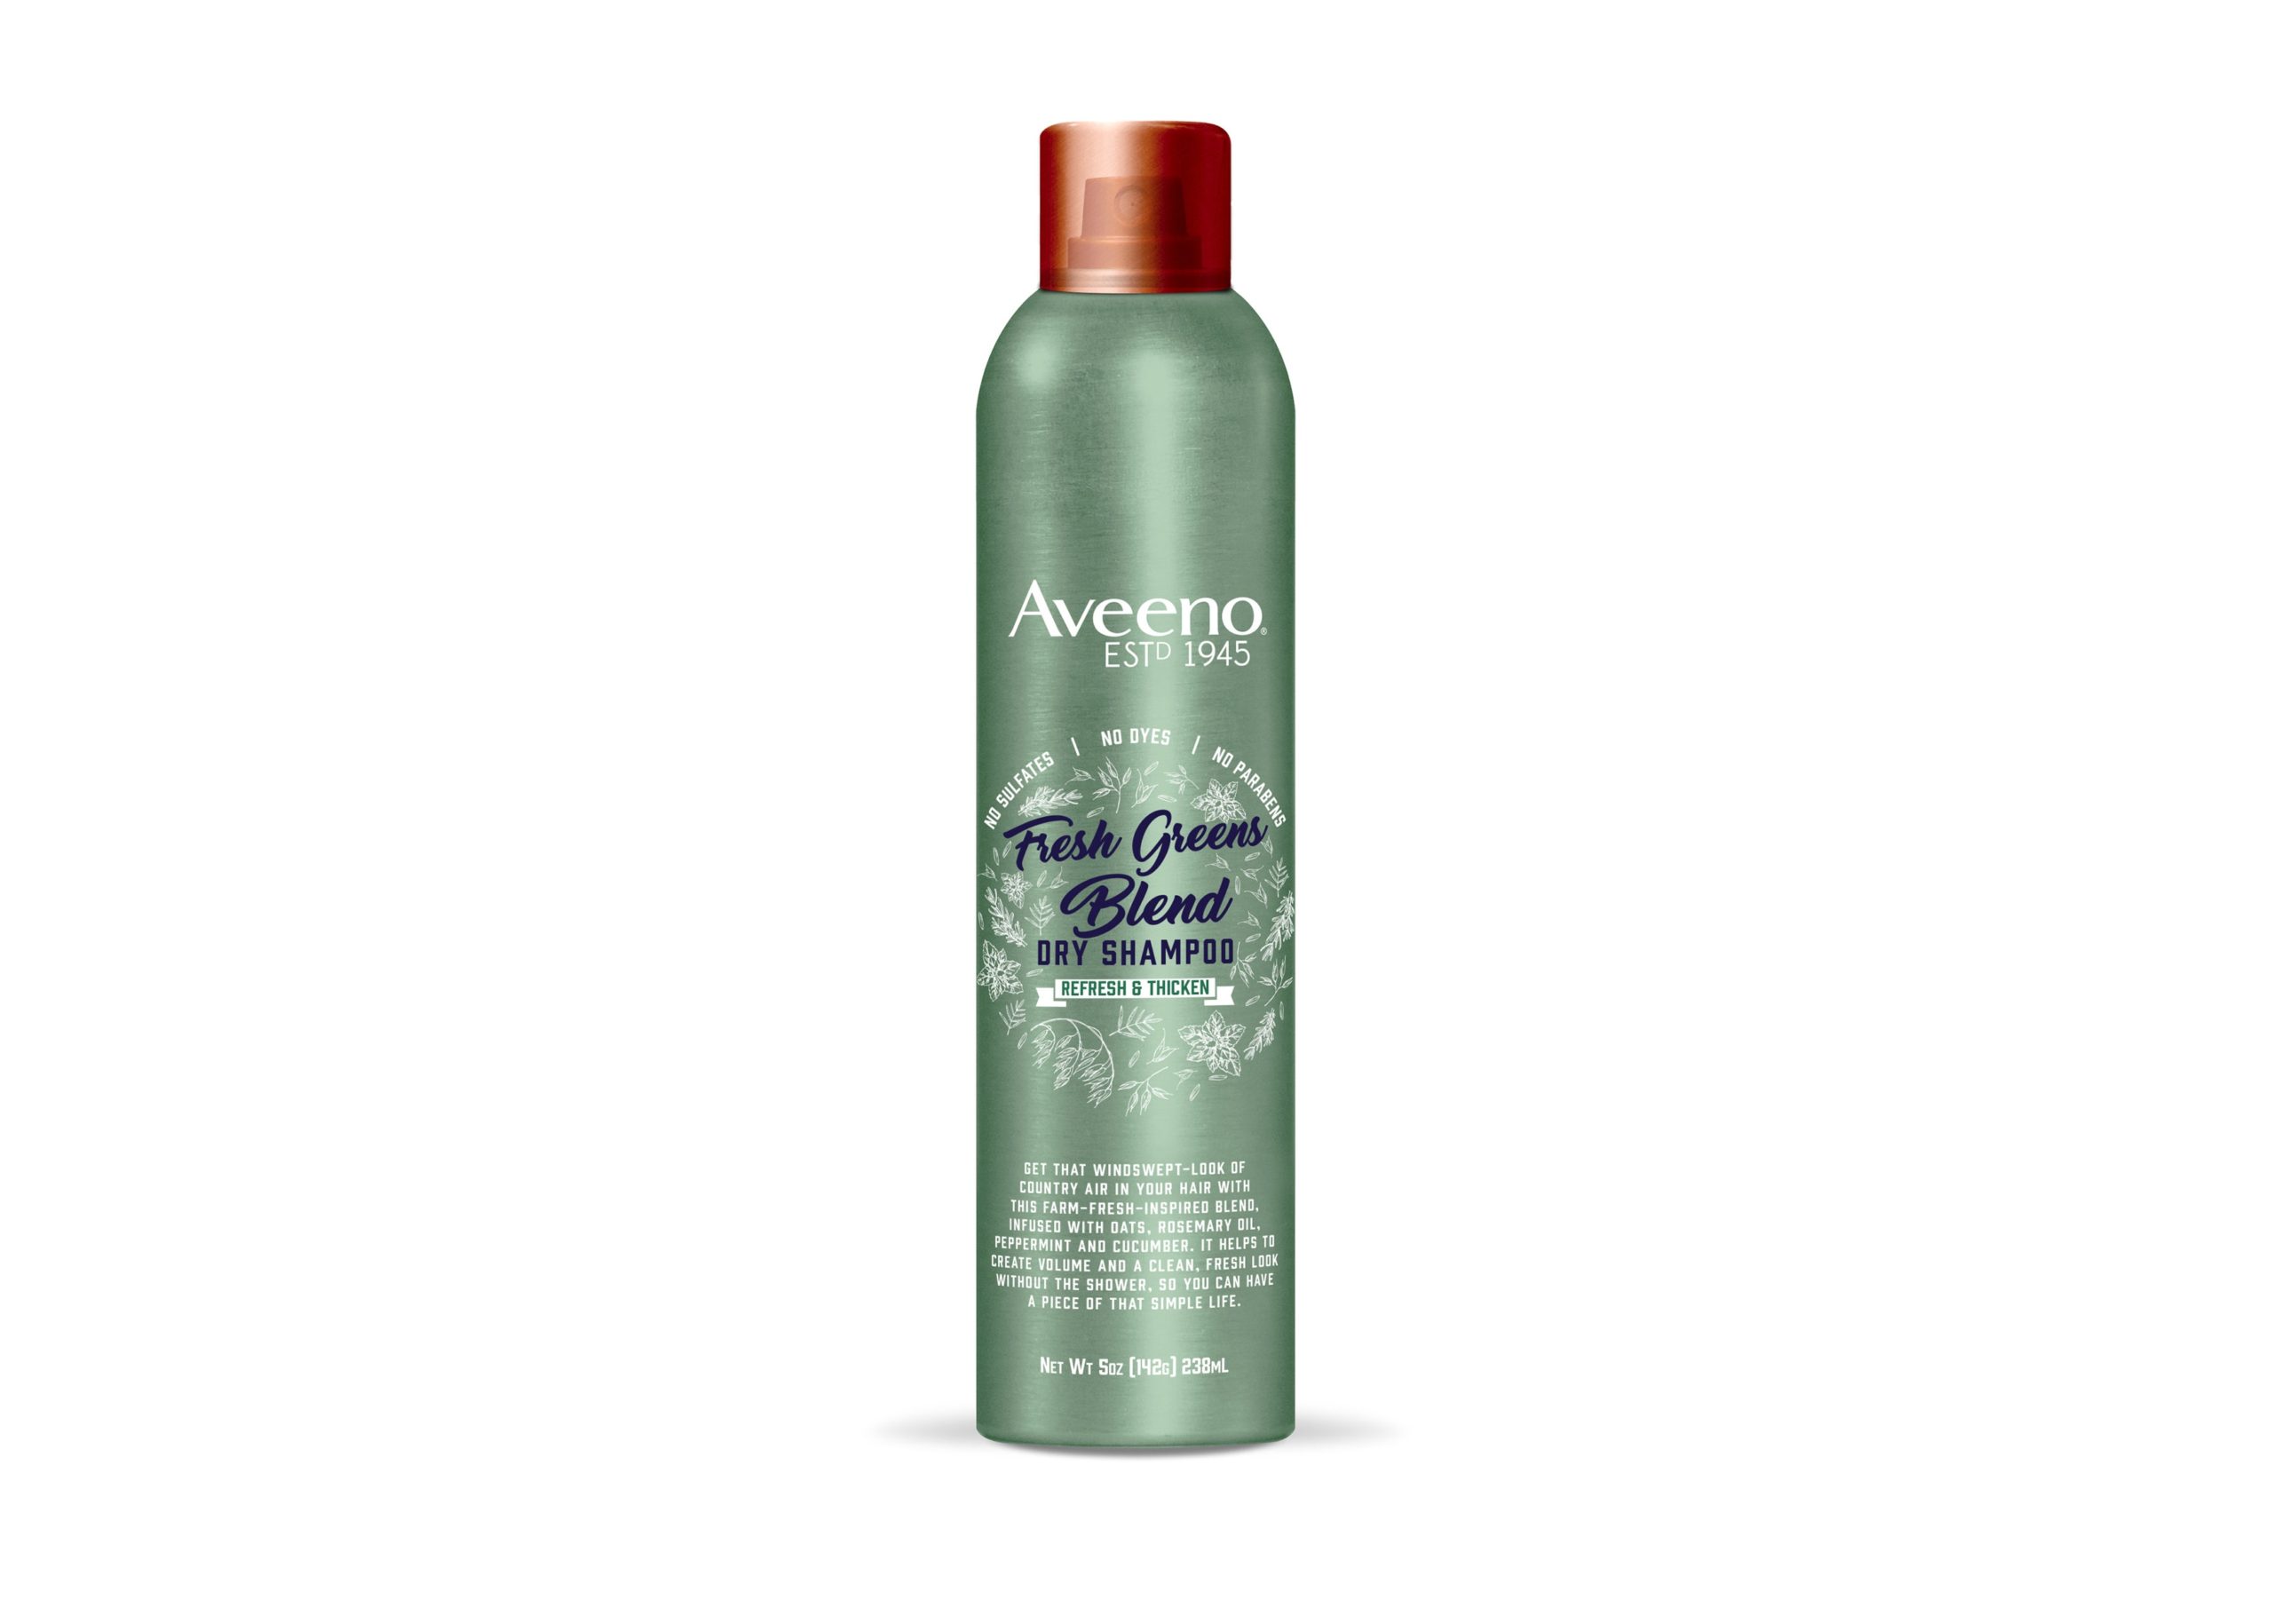 Aveeno Fresh Greens Dry Shampoo Works Wonders for Fine, Wavy Hair: Review